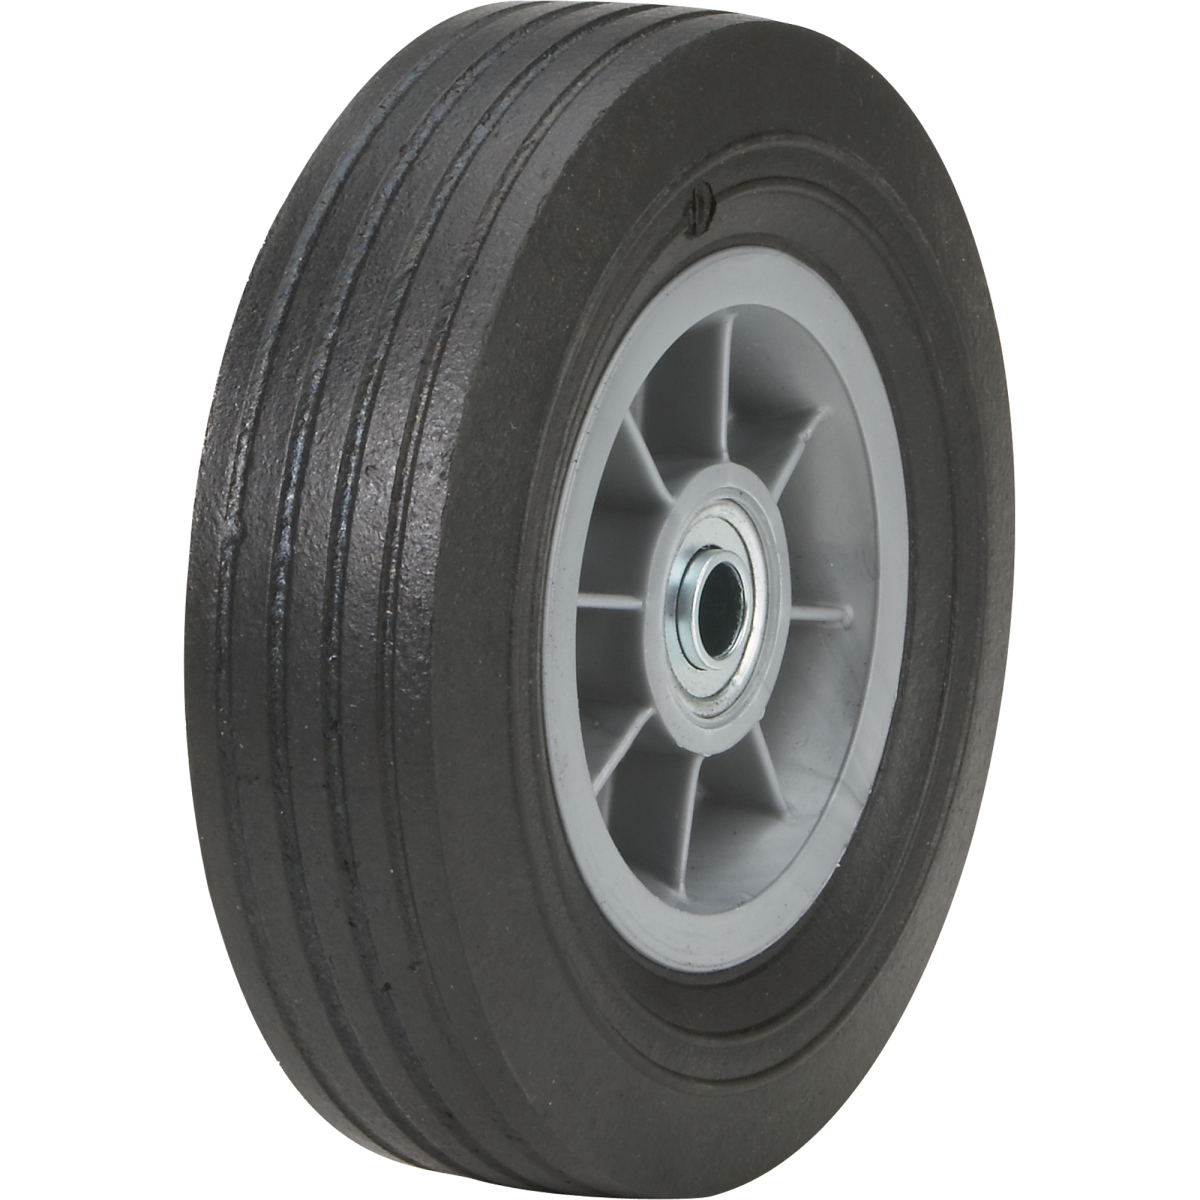 Wesco Industrial 109486 Solid Rubber Wheels